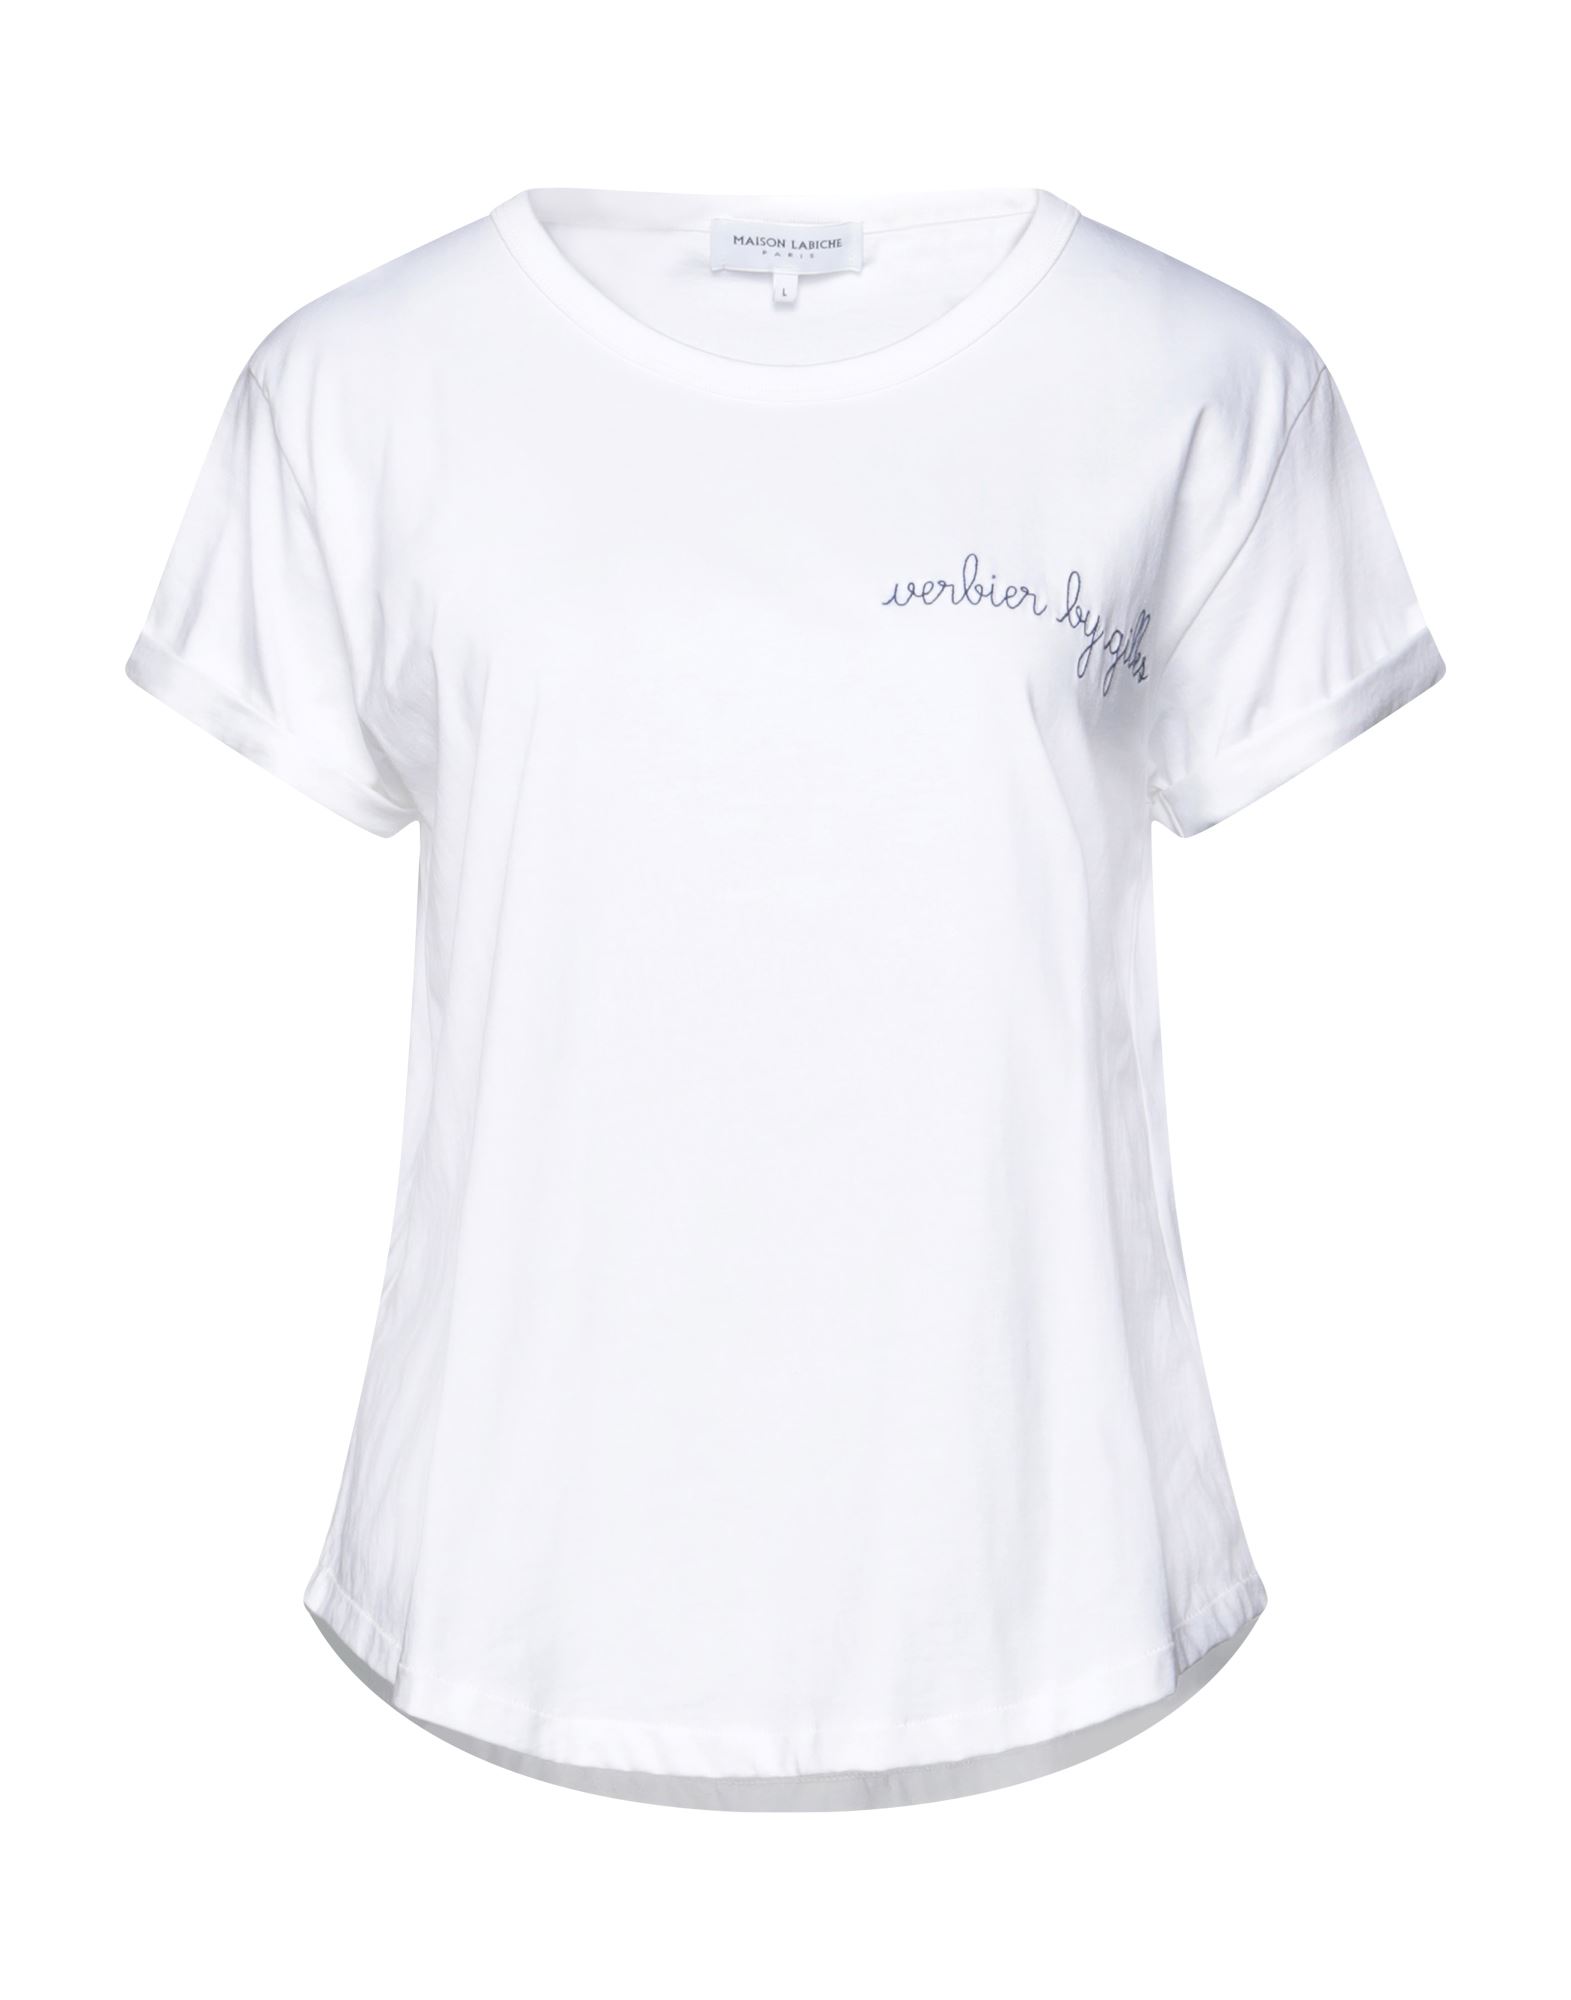 MAISON LABICHE T-Shirts | ModeSens